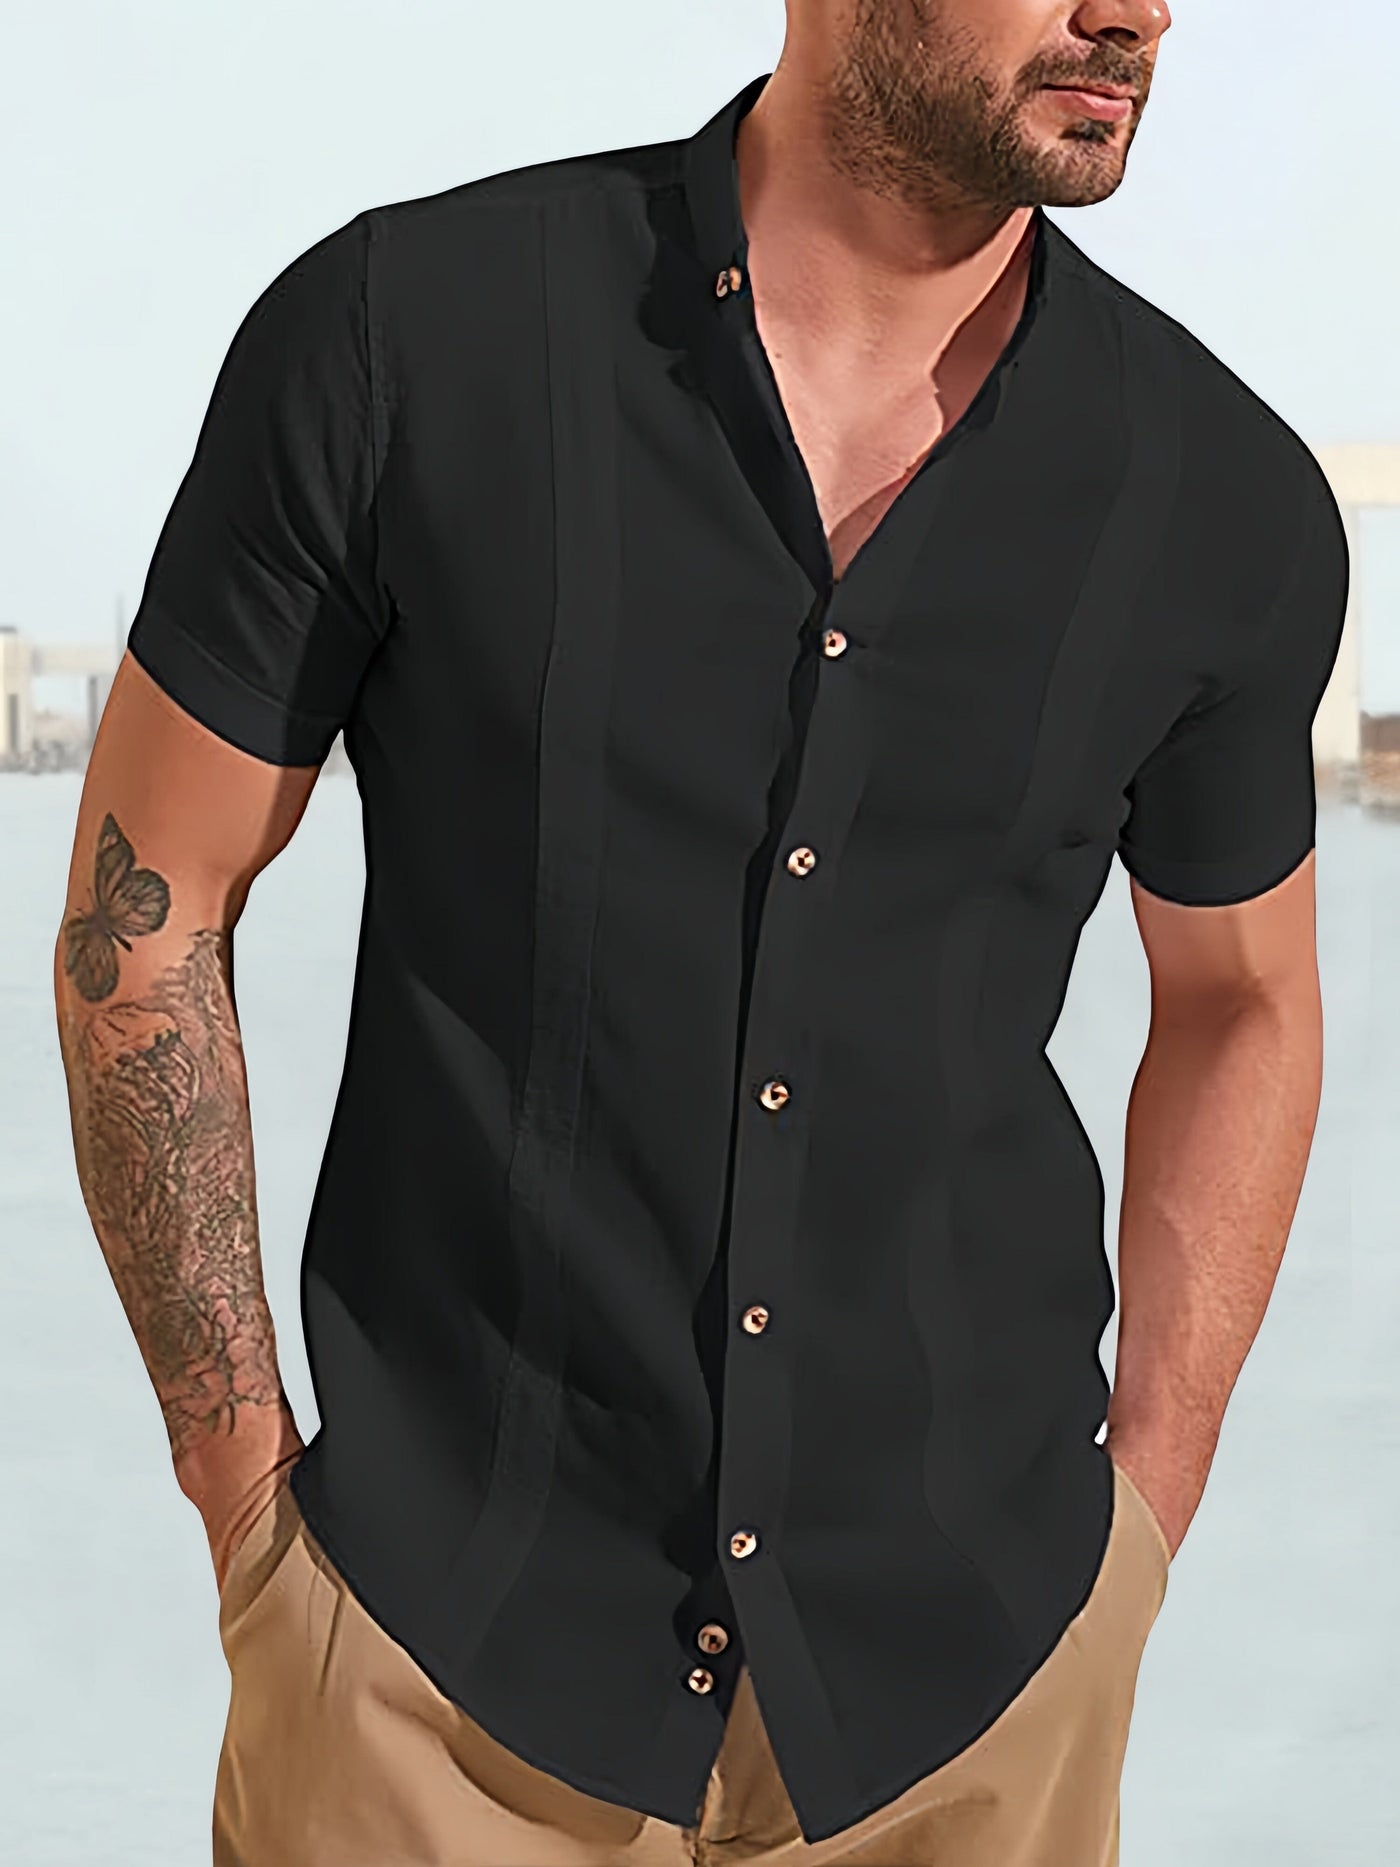 Soft Cotton Linen Loose Fit Button Shirt Shirts coofandystore Black M 